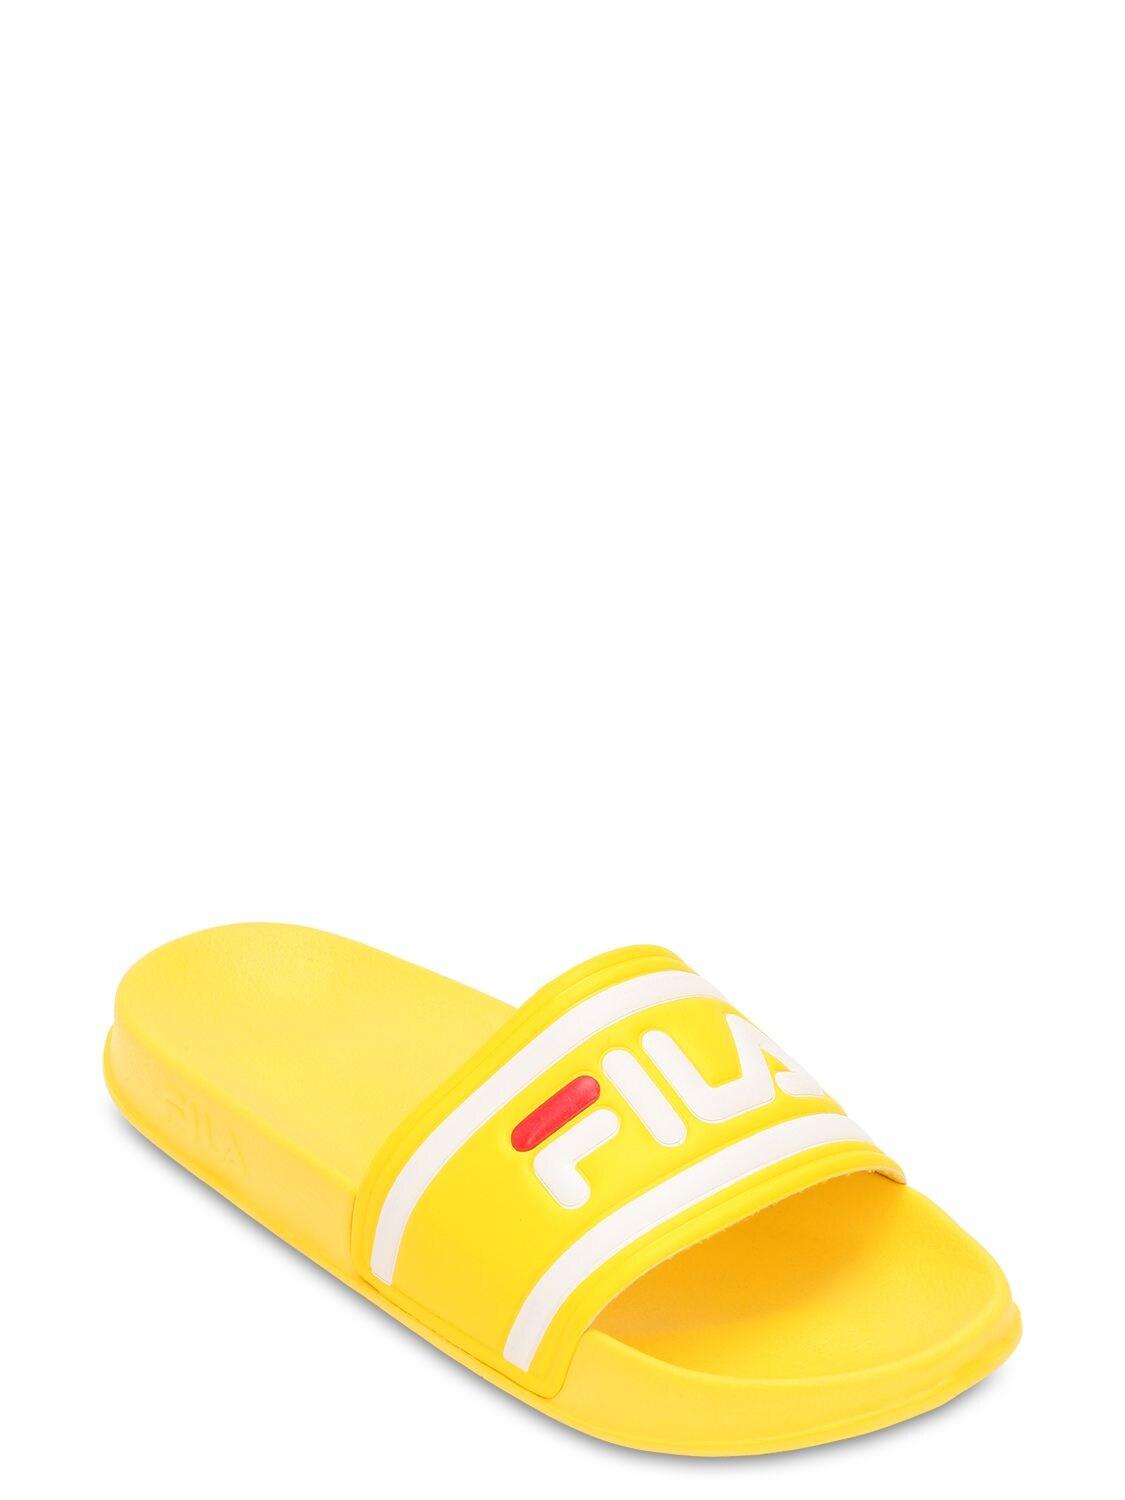 Fila Morro Bay Slipper Slide Sandals in Yellow - Lyst